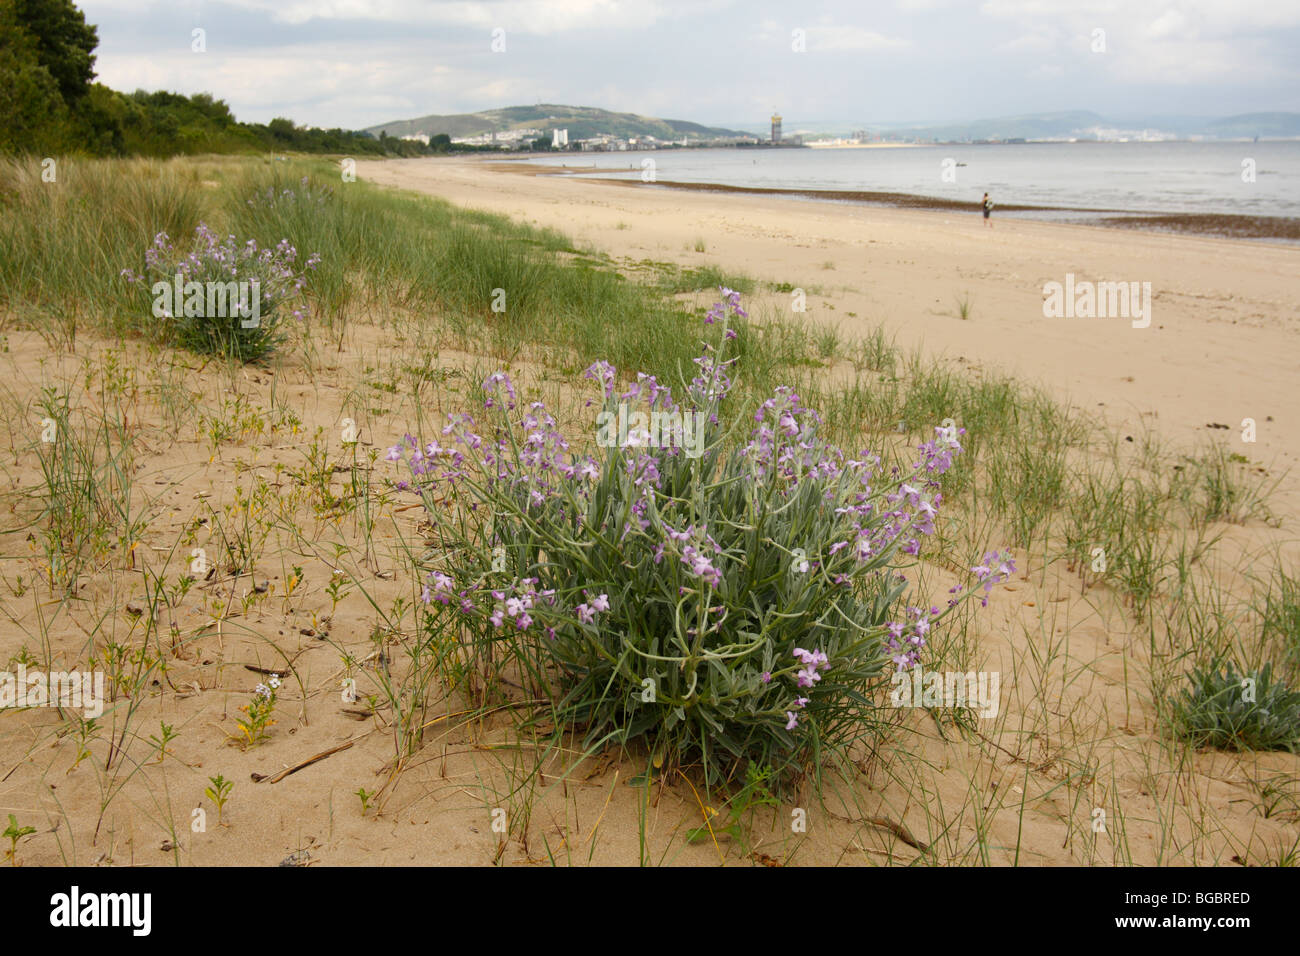 SEA STOCK, Matthiola sinuata, growing on sand dunes on Swansea Beach, West Glamorgan, South Wales, U.K. Stock Photo